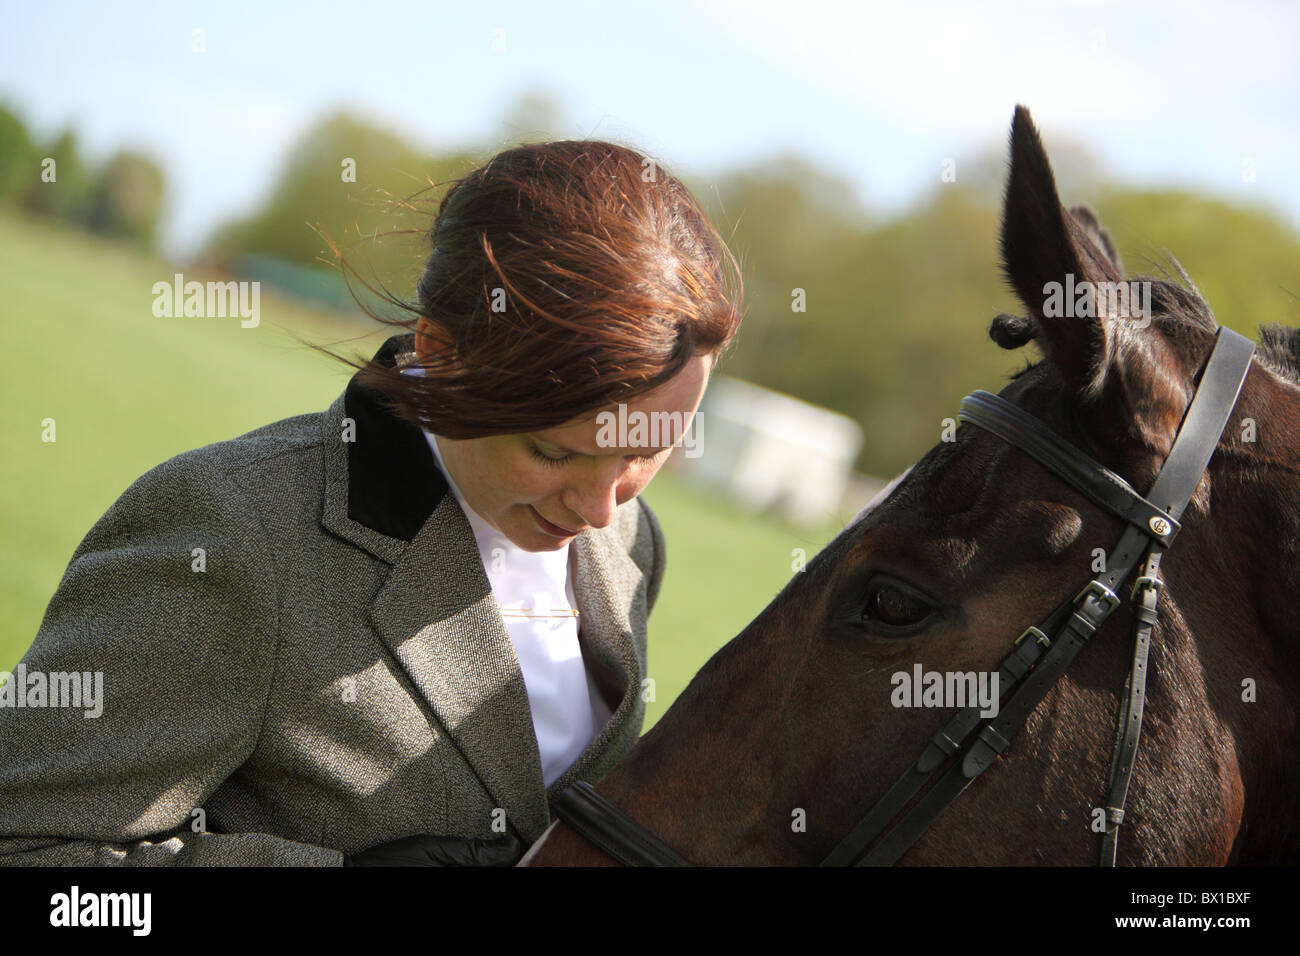 rider and horse Scotland UK head to head touching Stock Photo